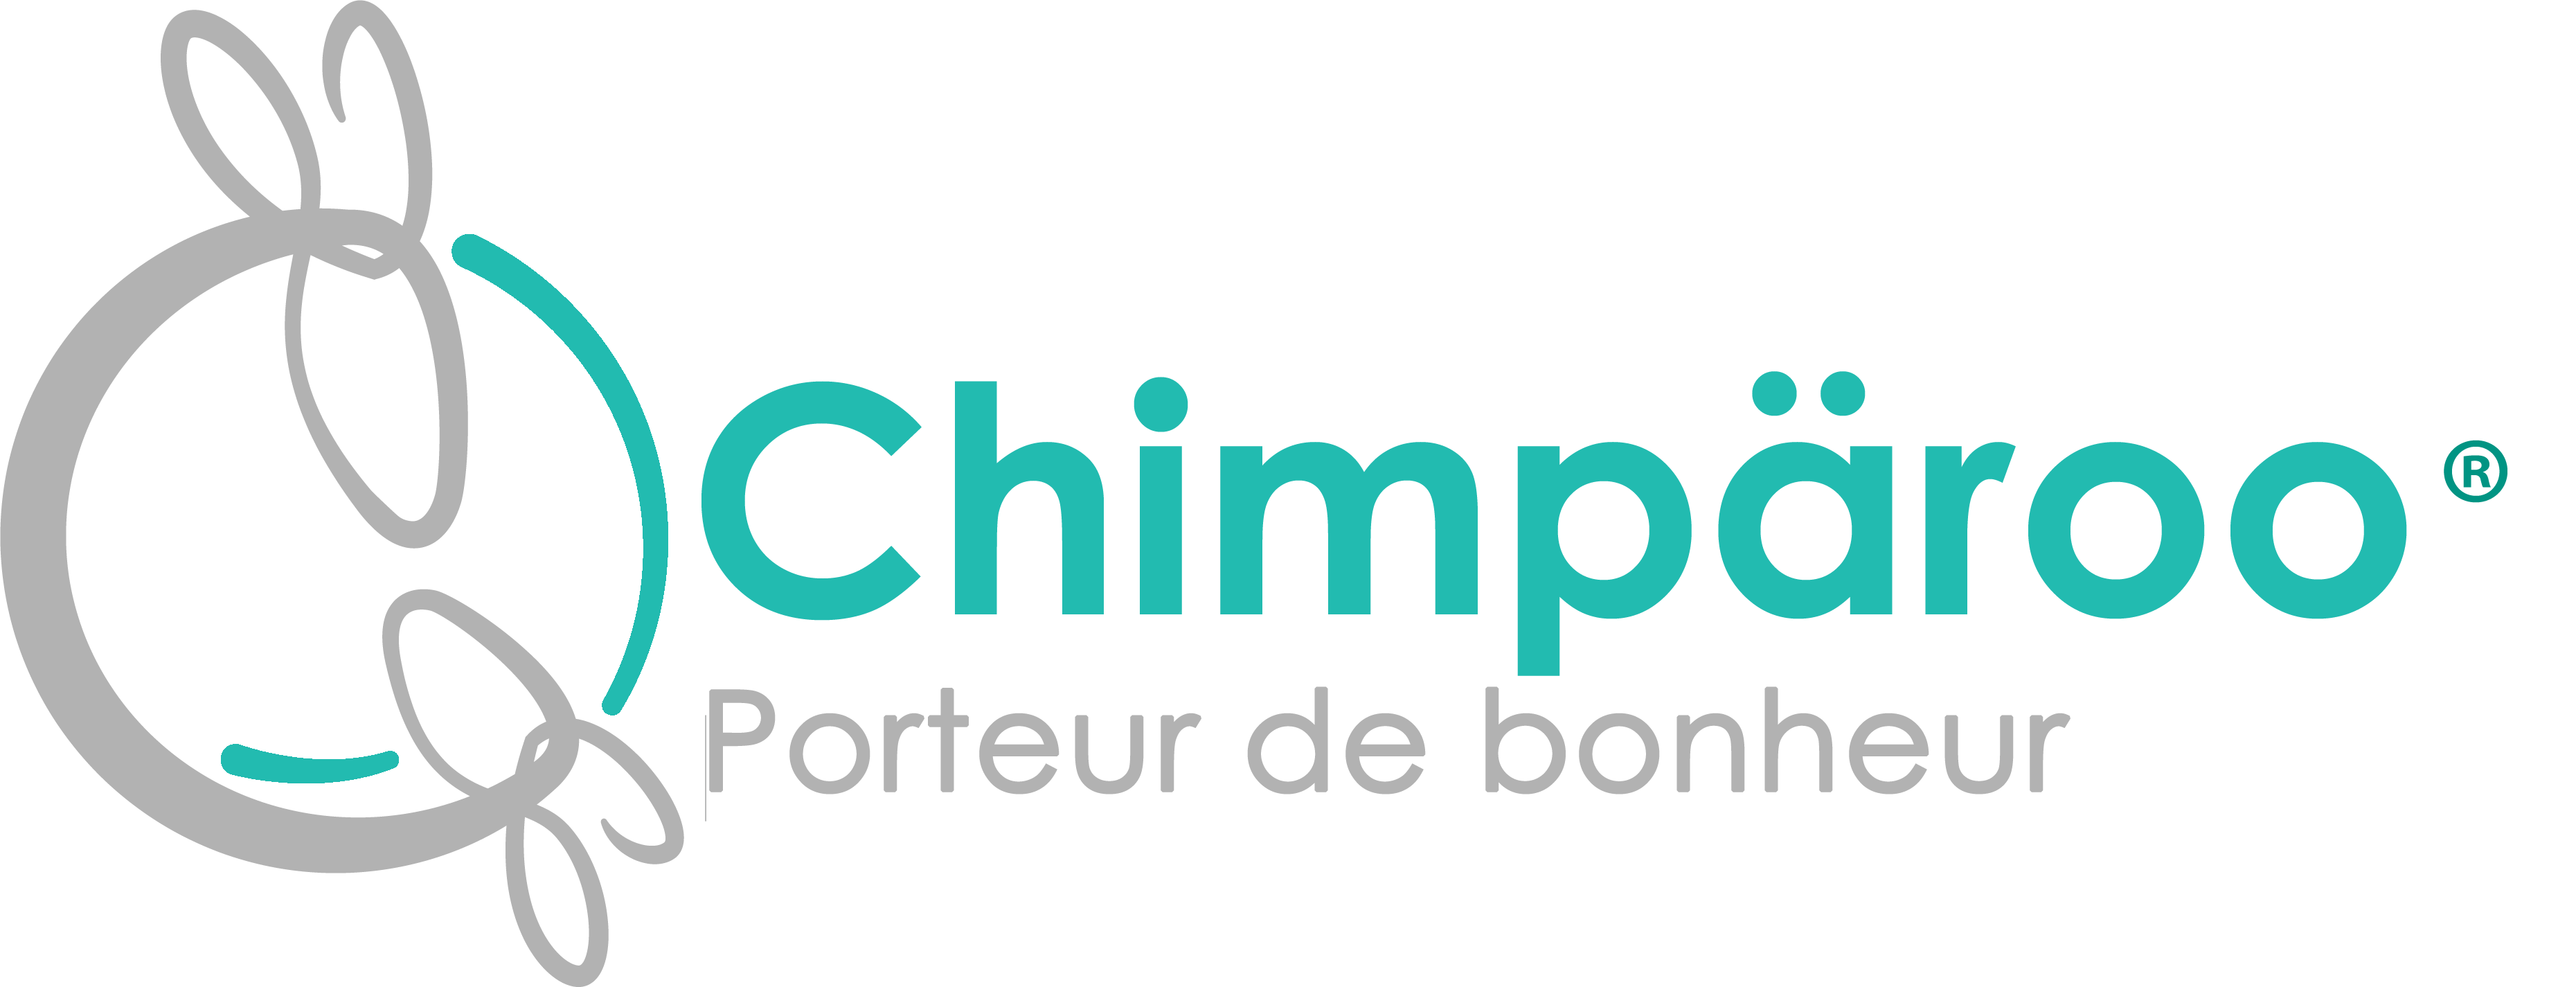 Logo - Chimparoo - New - francais - long.png